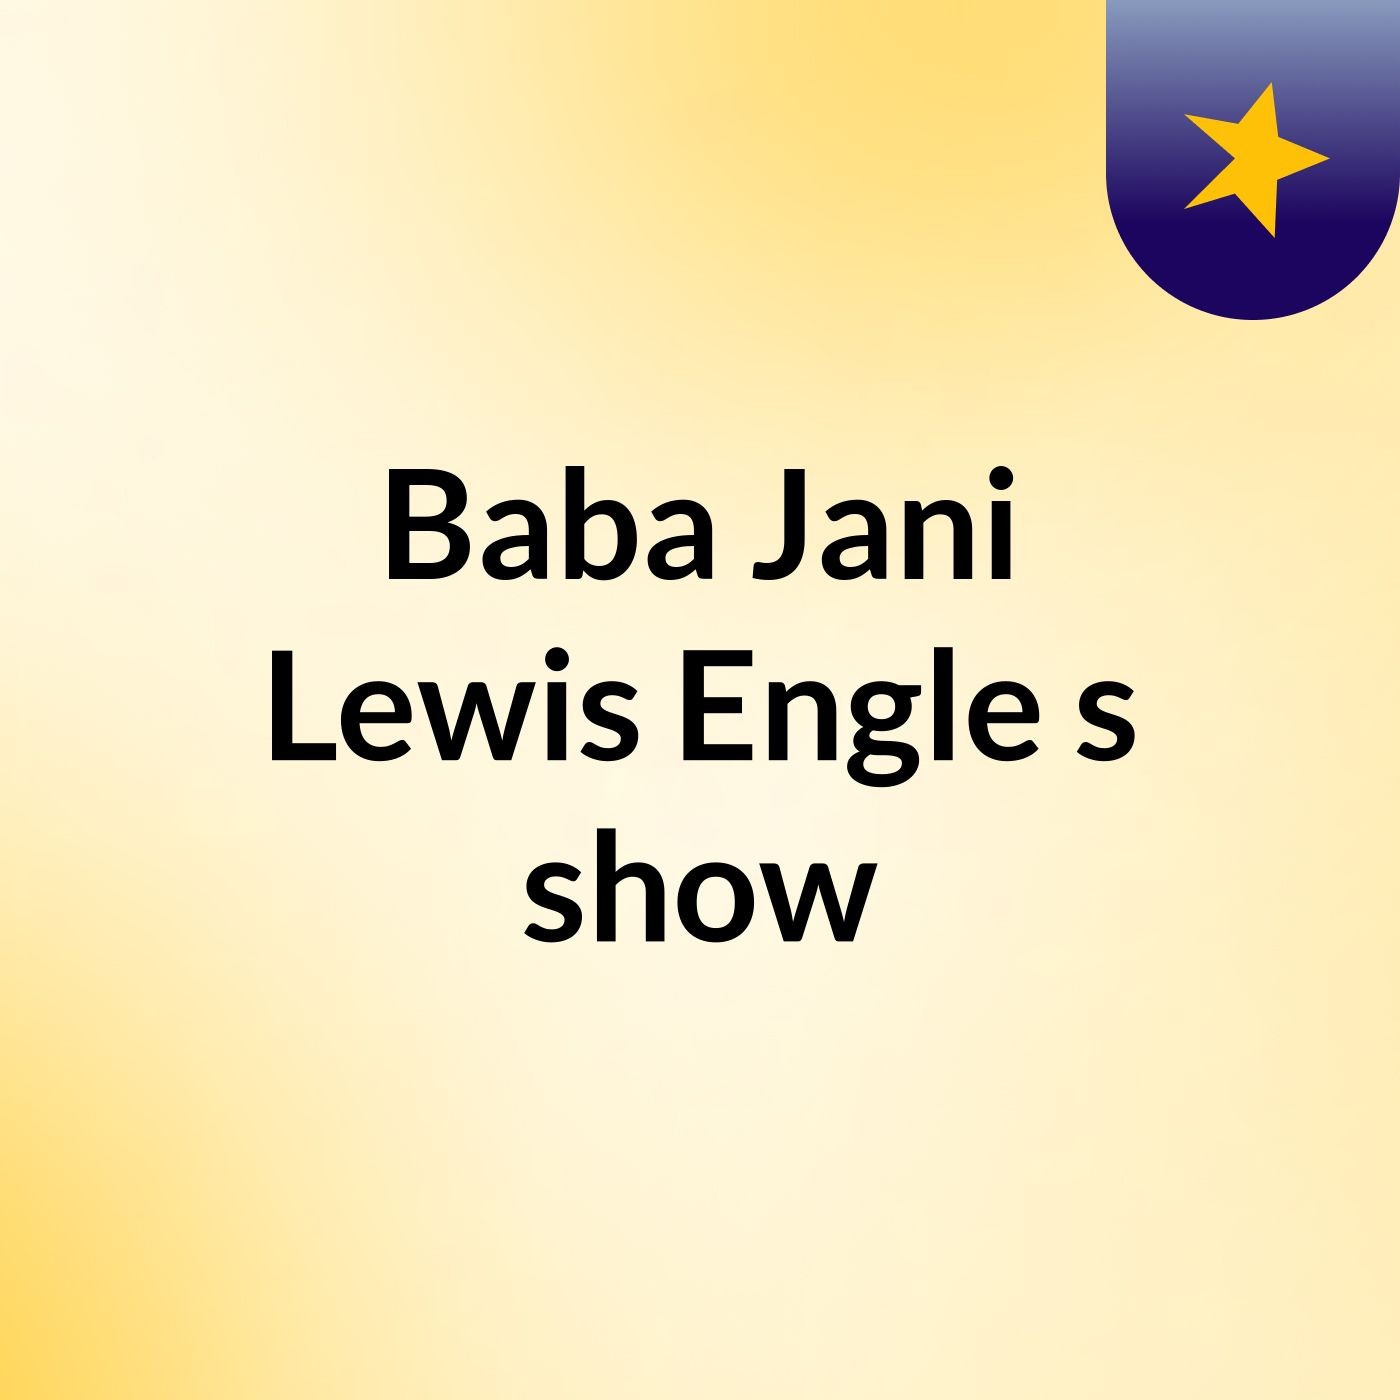 Episode 6 - Baba Jani, Lewis Engle's show